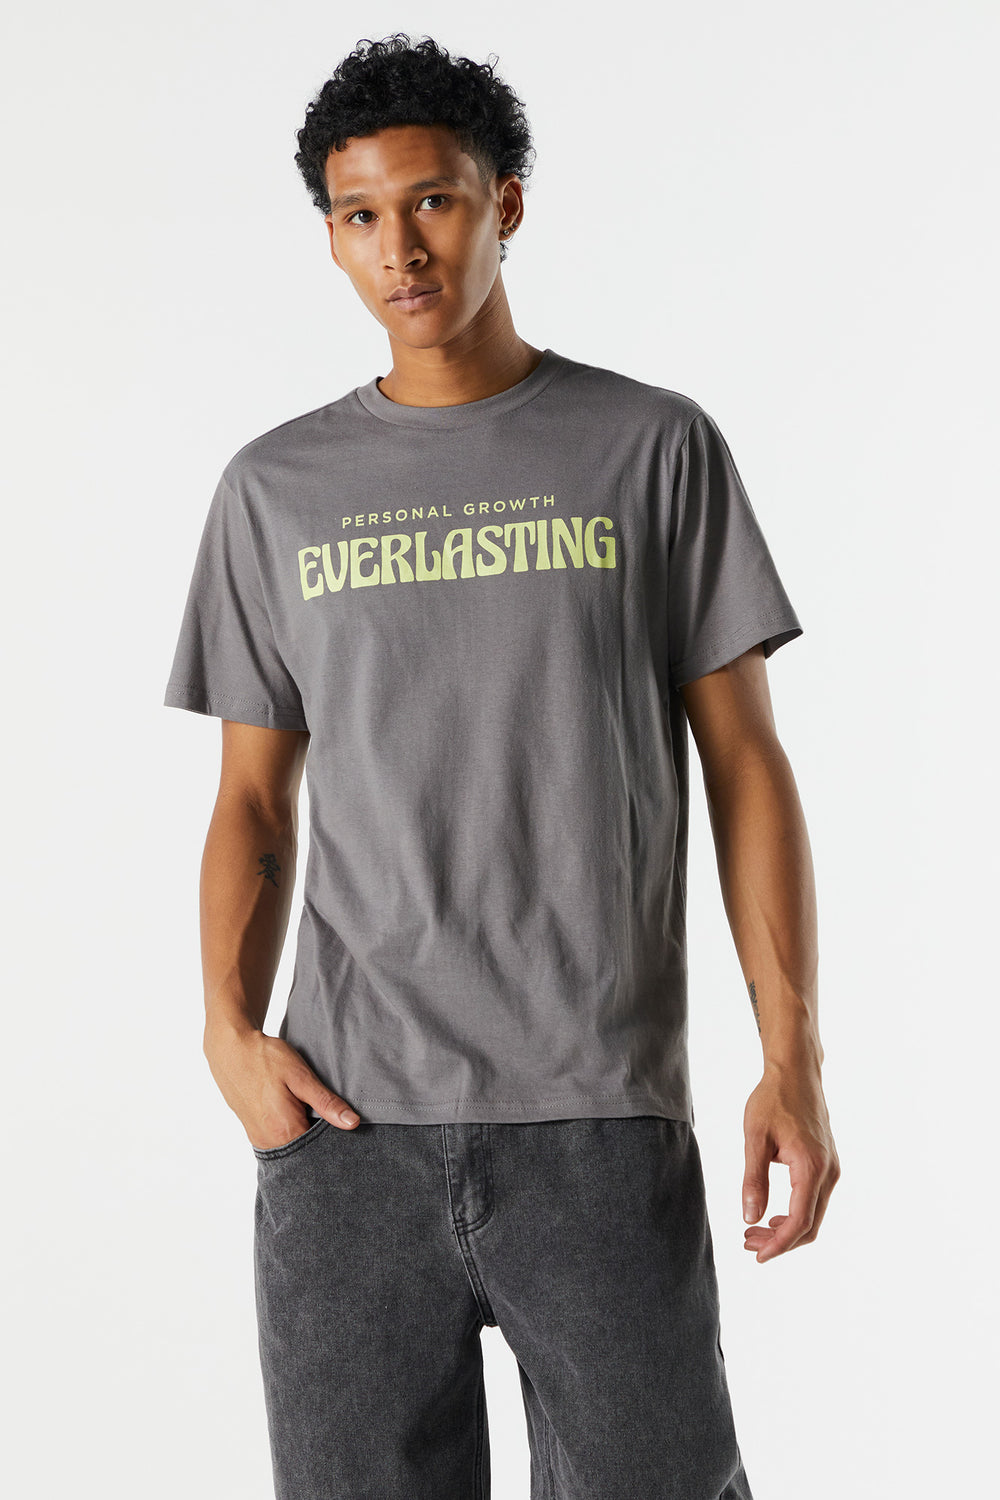 Everlasting Growth Graphic T-Shirt Everlasting Growth Graphic T-Shirt 1